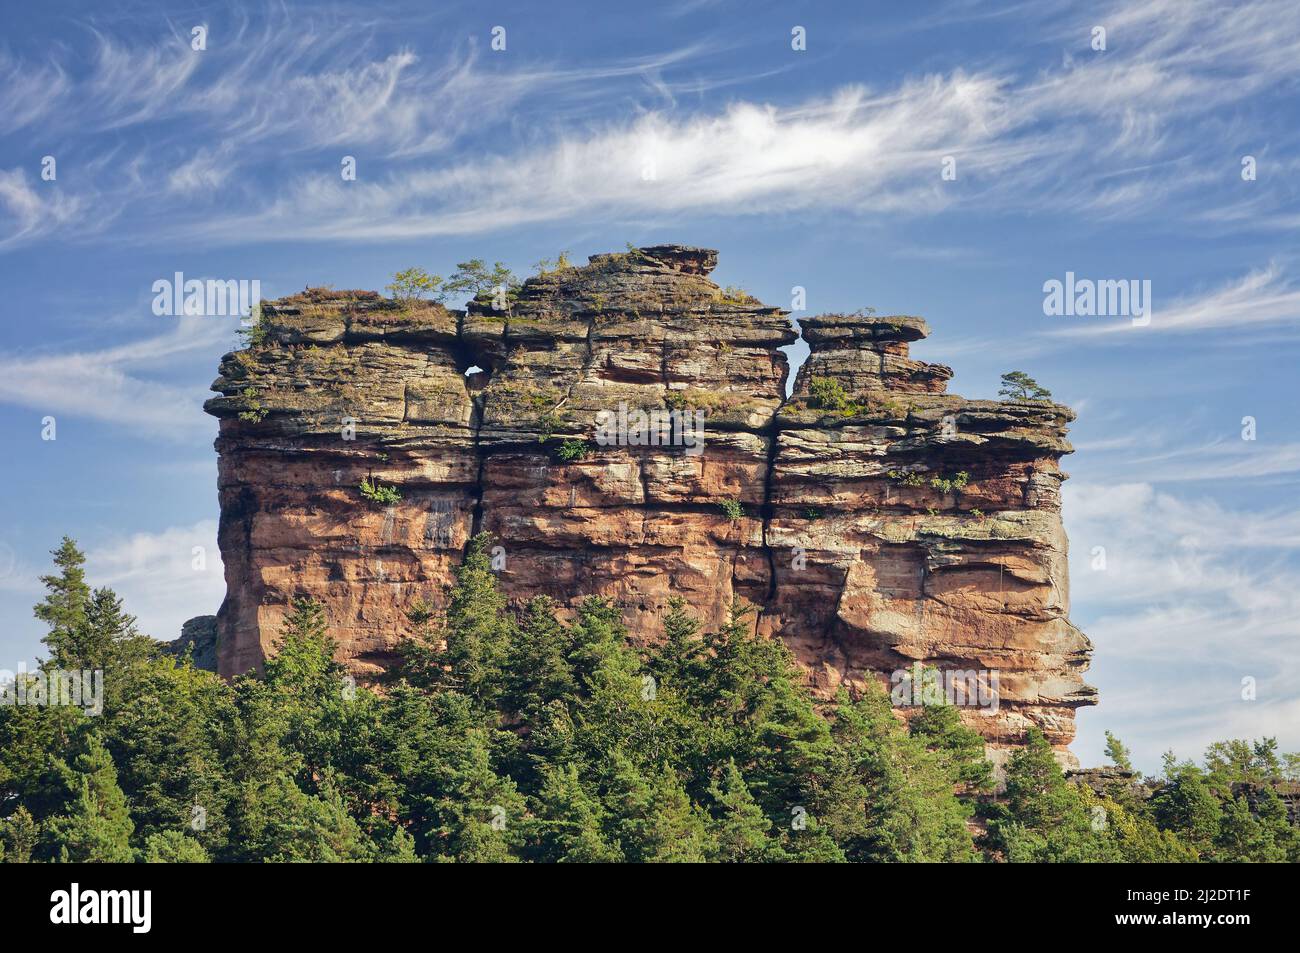 Asselstein Rock,Trifels area near Annweiler,Palatinate Wine region,Rhineland-Palatinate,Germany Stock Photo